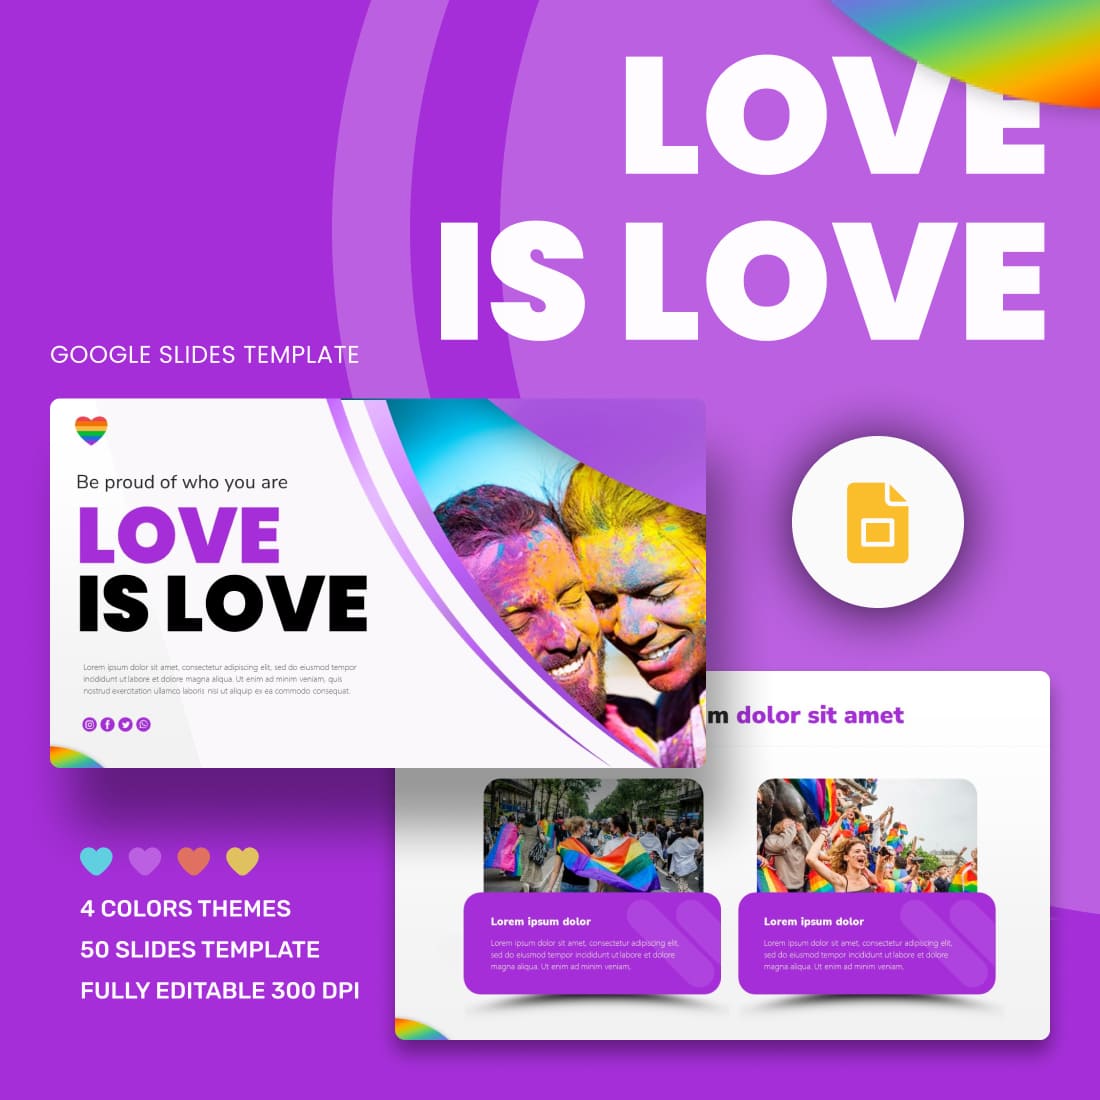 Love is Love LGBT Google Slides Theme.